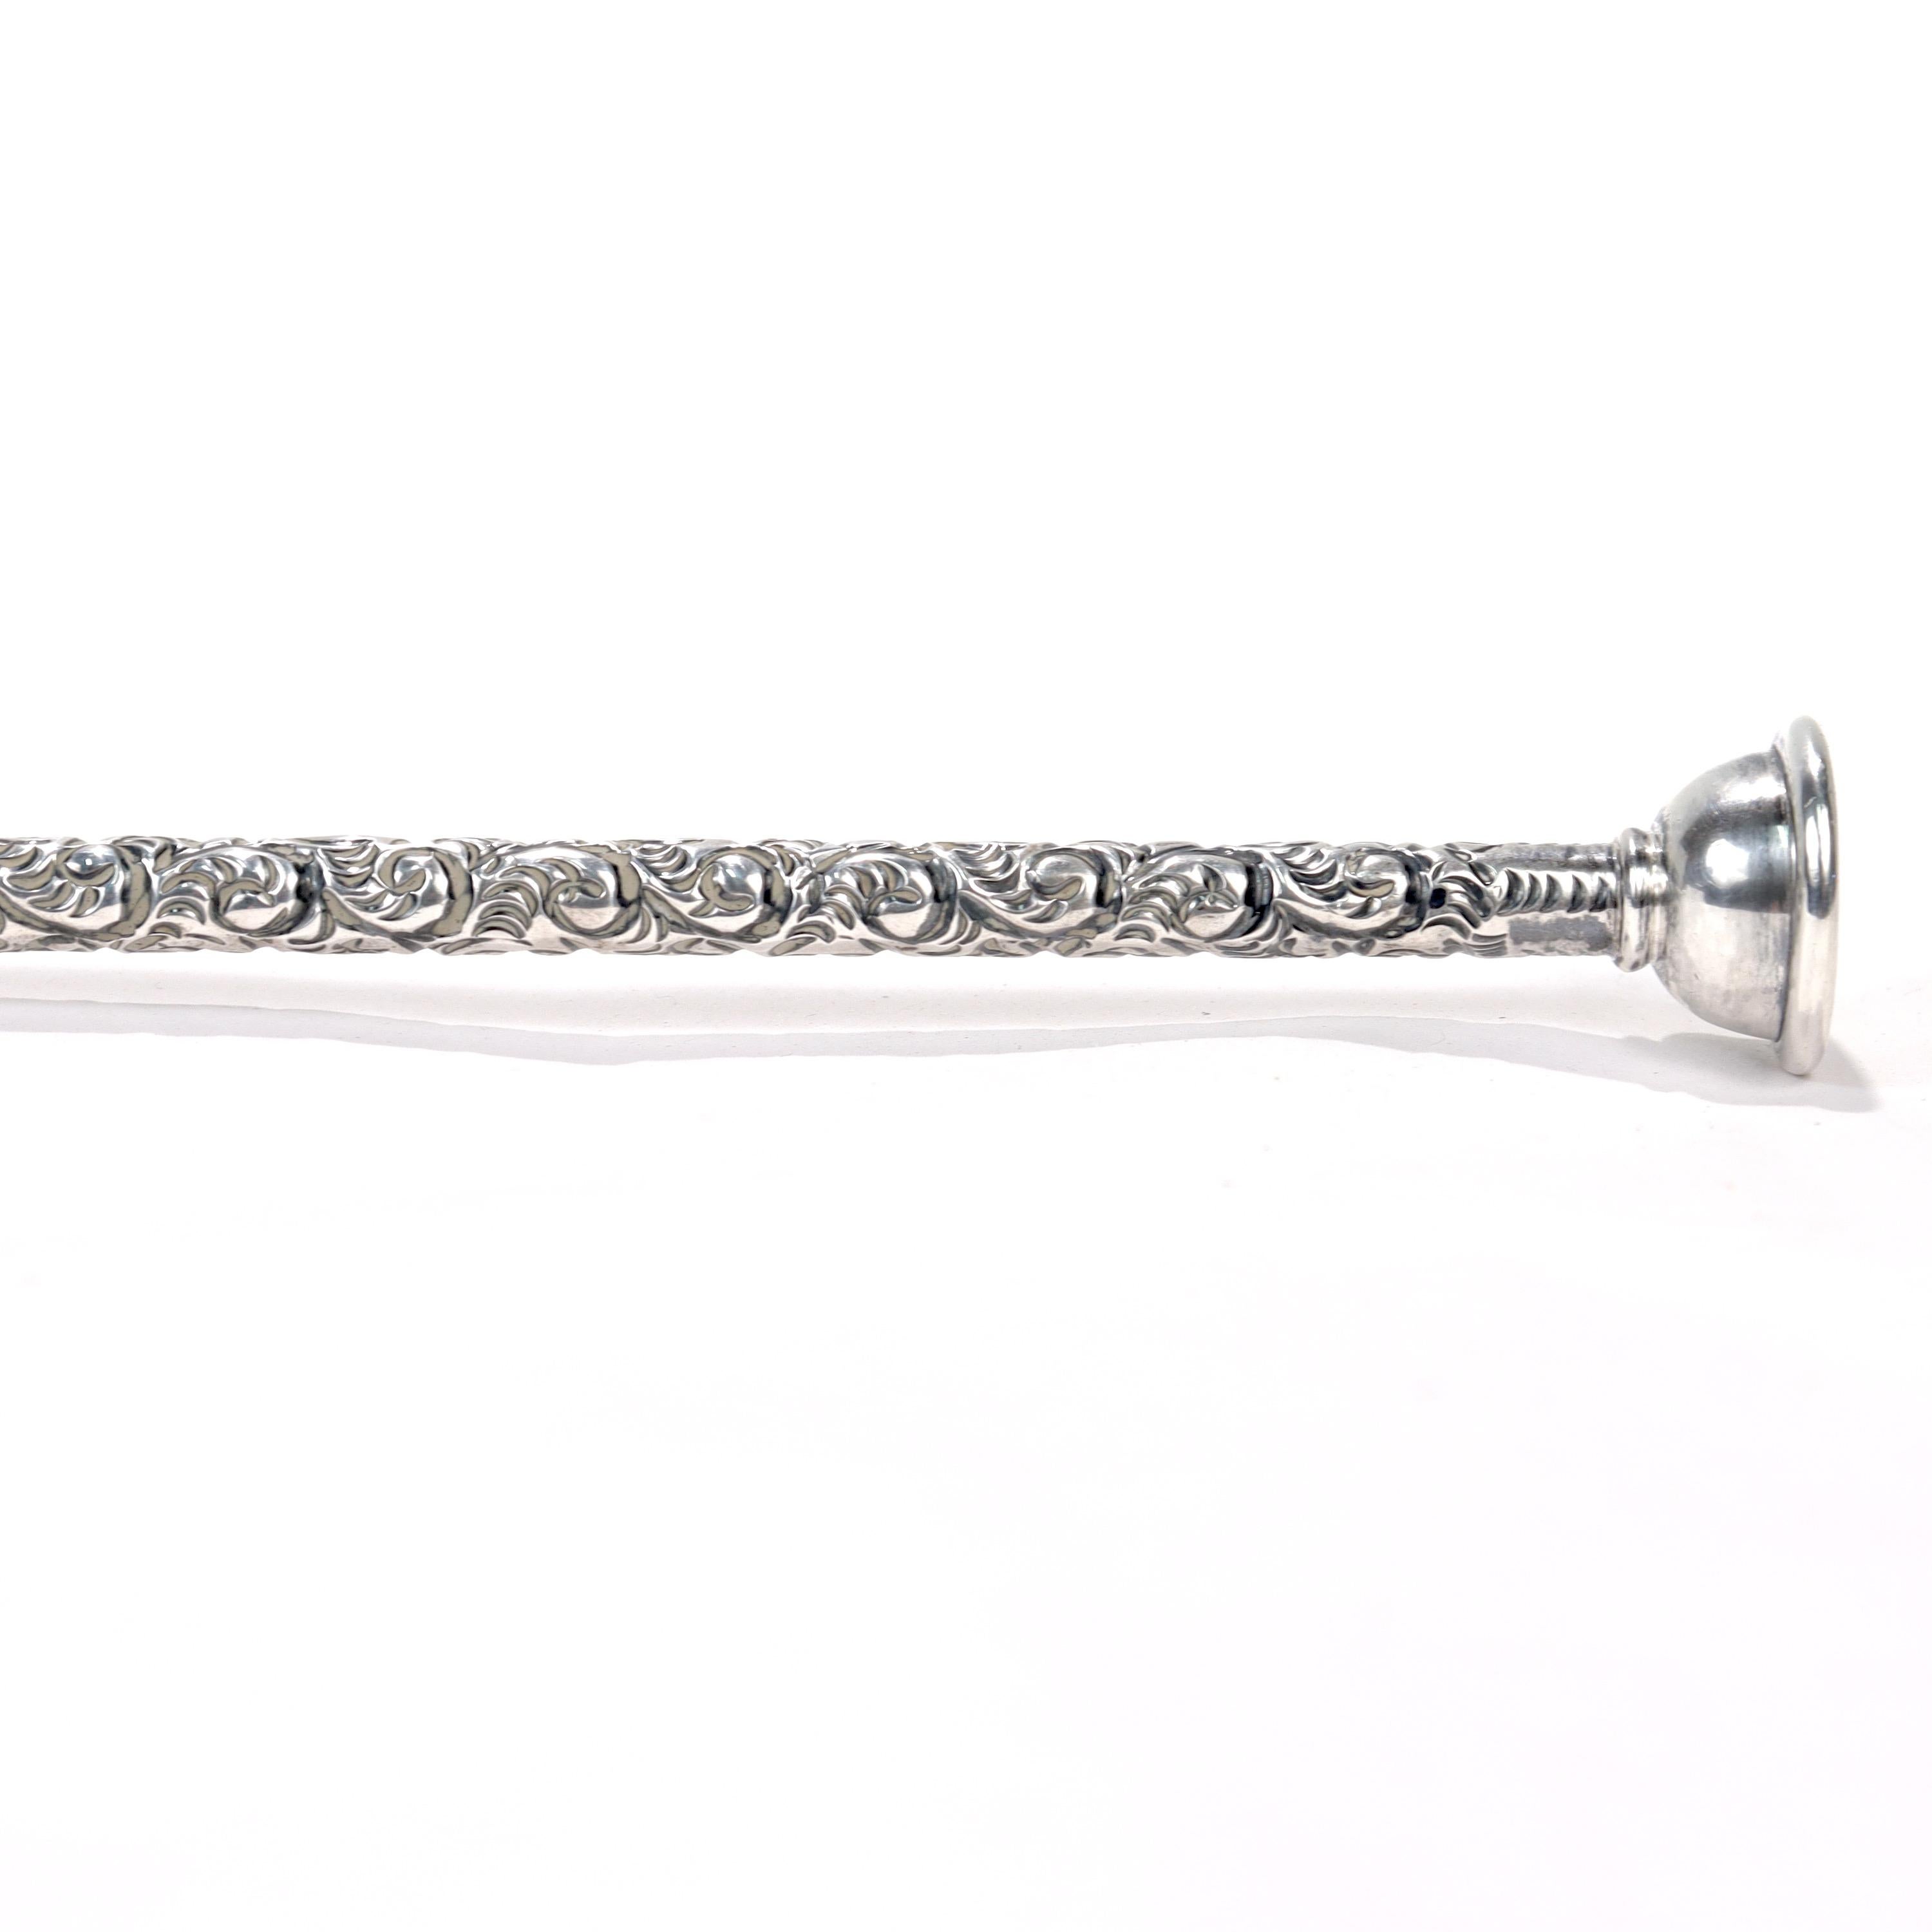 Antique Edwardian Repousse Sterling Silver Ear Trumpet or Horn 3